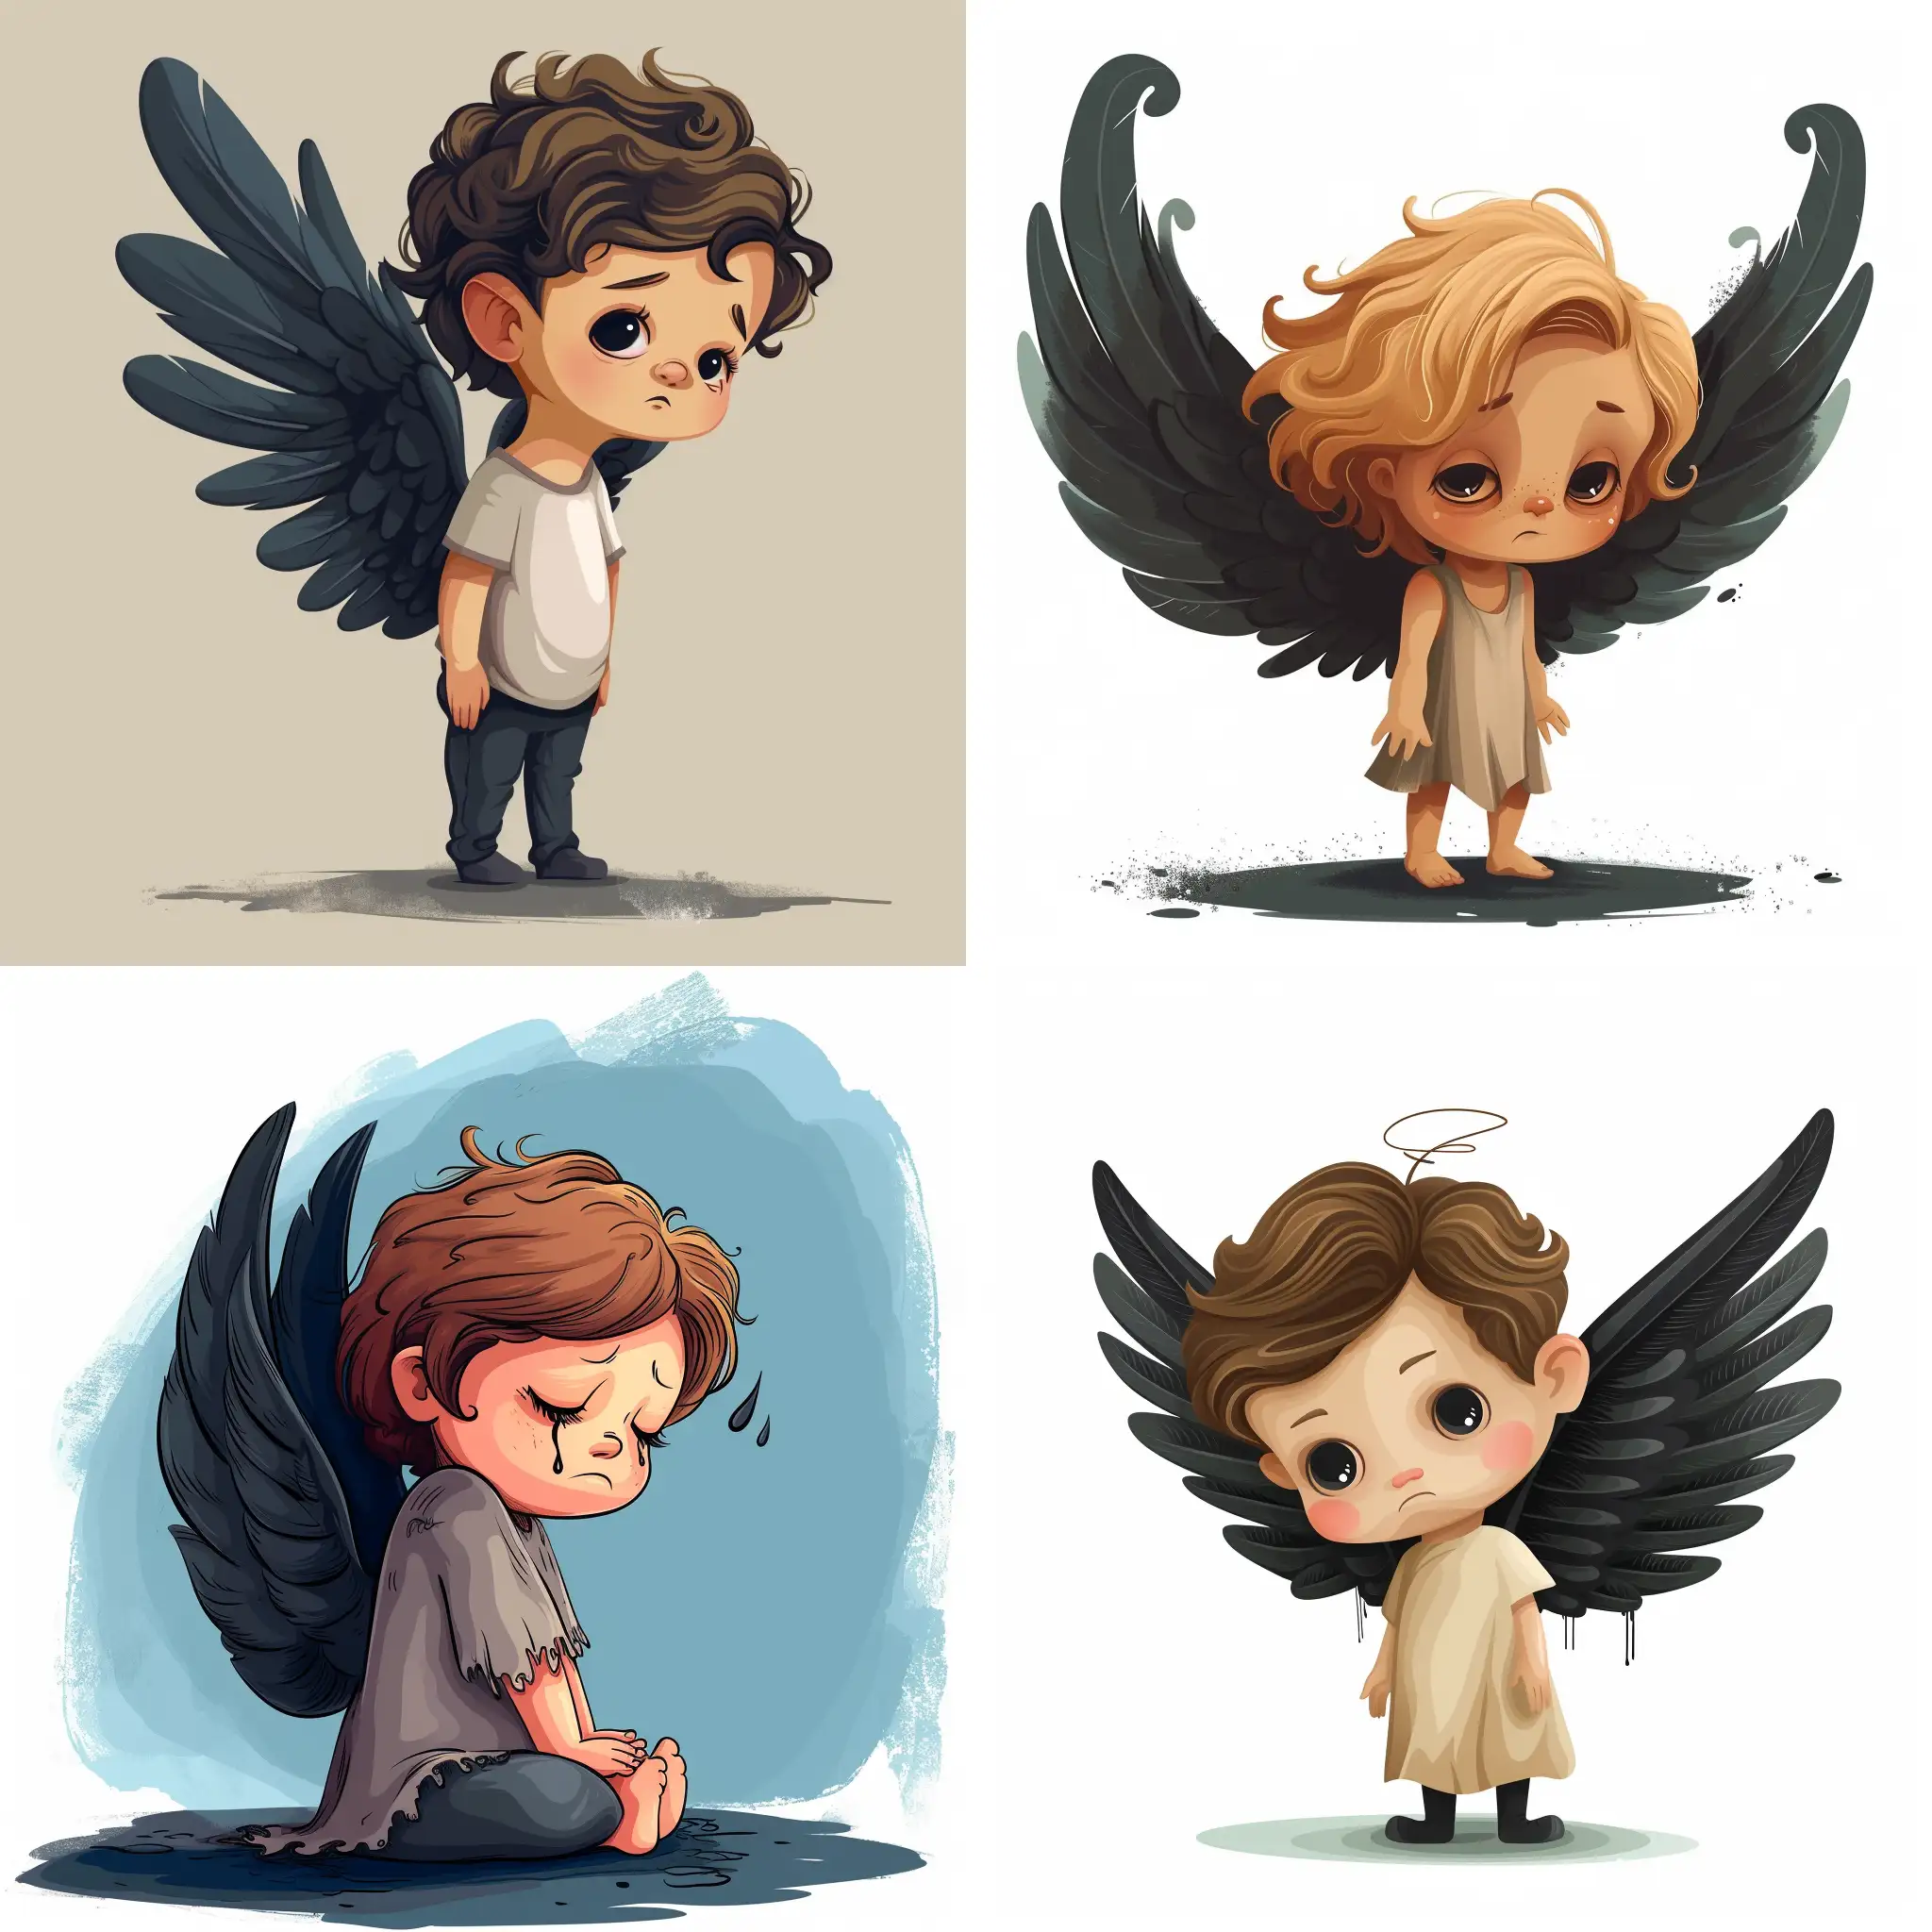 Sad little cartoon angel with black wings